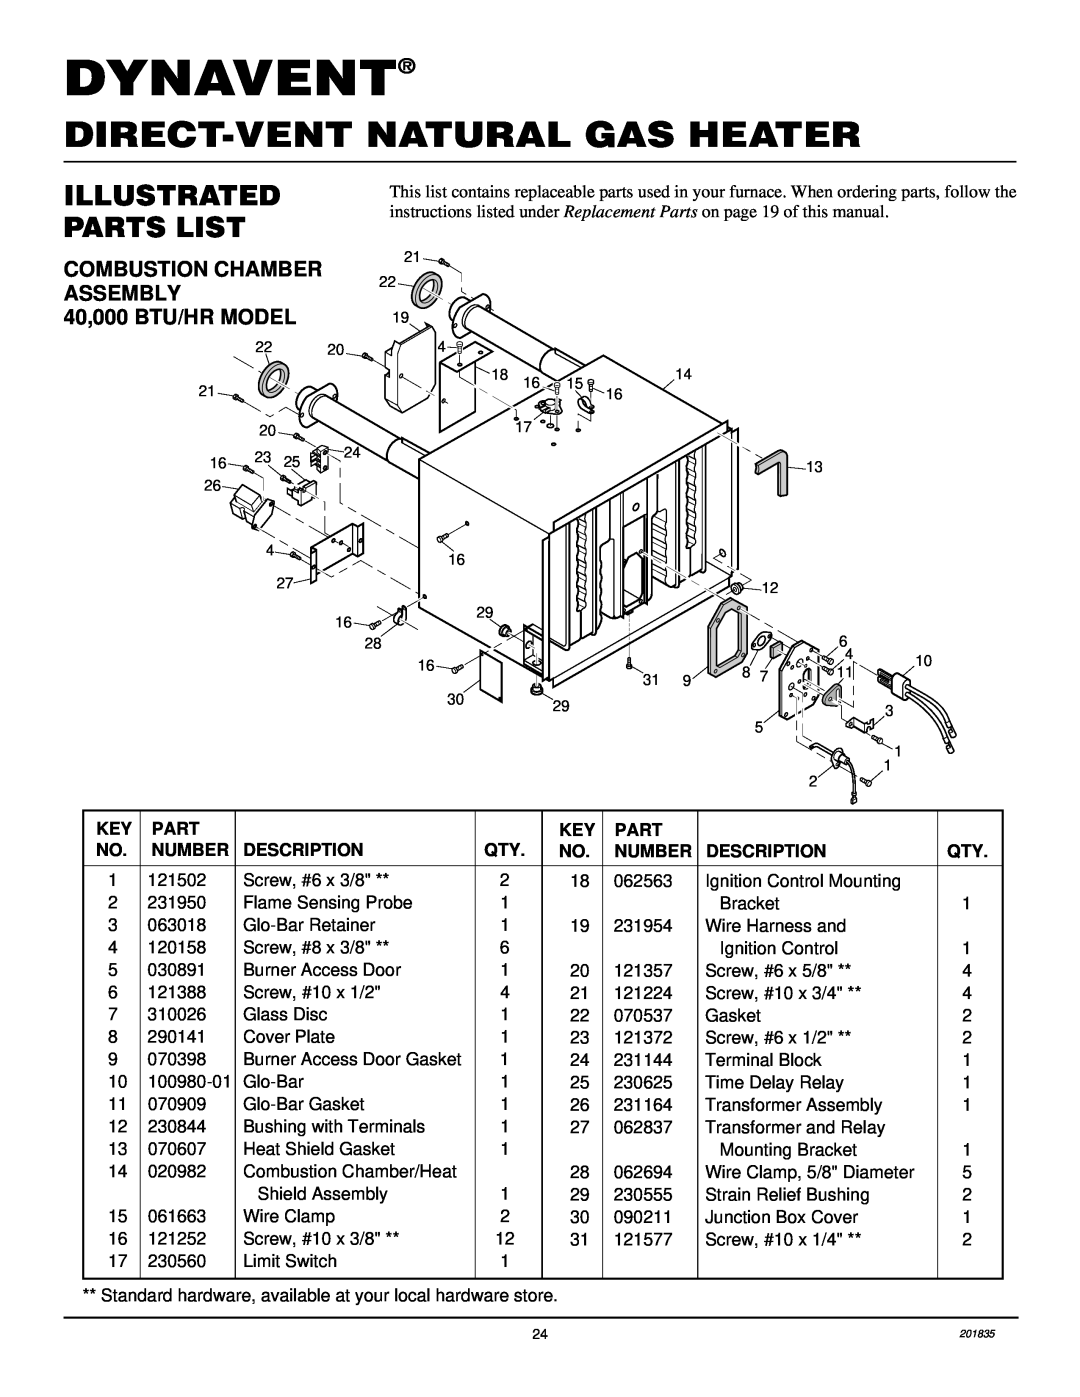 Desa DNV40NB, DNV25NB Dynavent, Direct-Ventnatural Gas Heater, Illustrated Parts List, Combustion Chamber, Assembly 